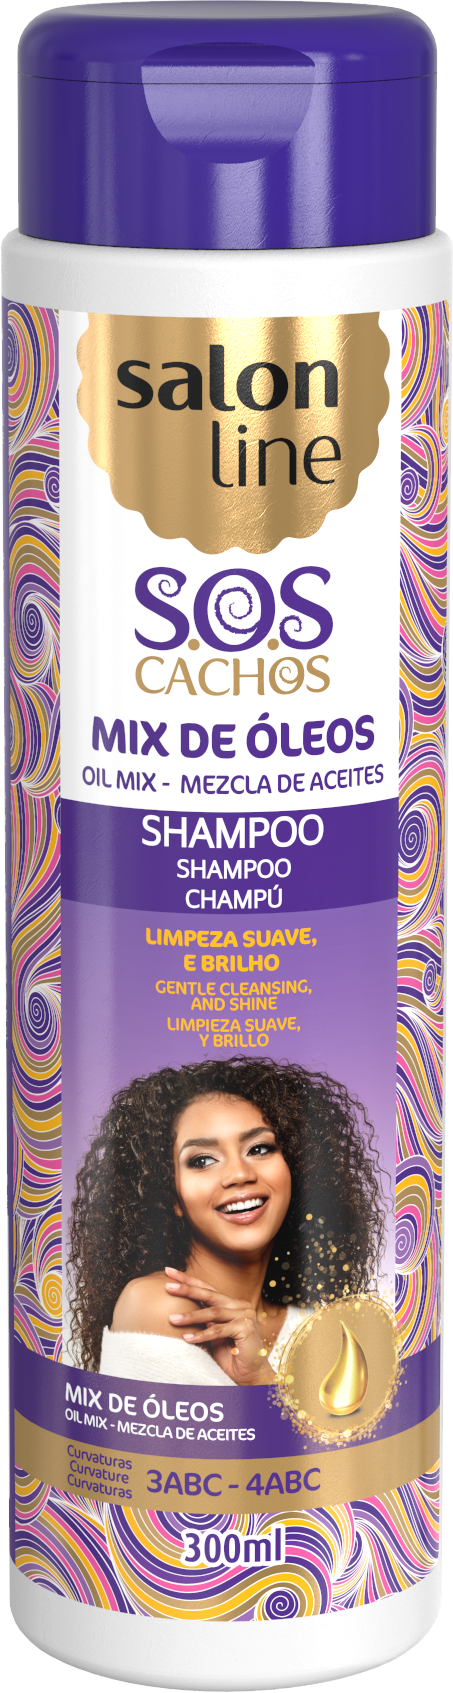 Salon Line S.O.S Cachos Oil Mix Shampoo 300ml Salon Line